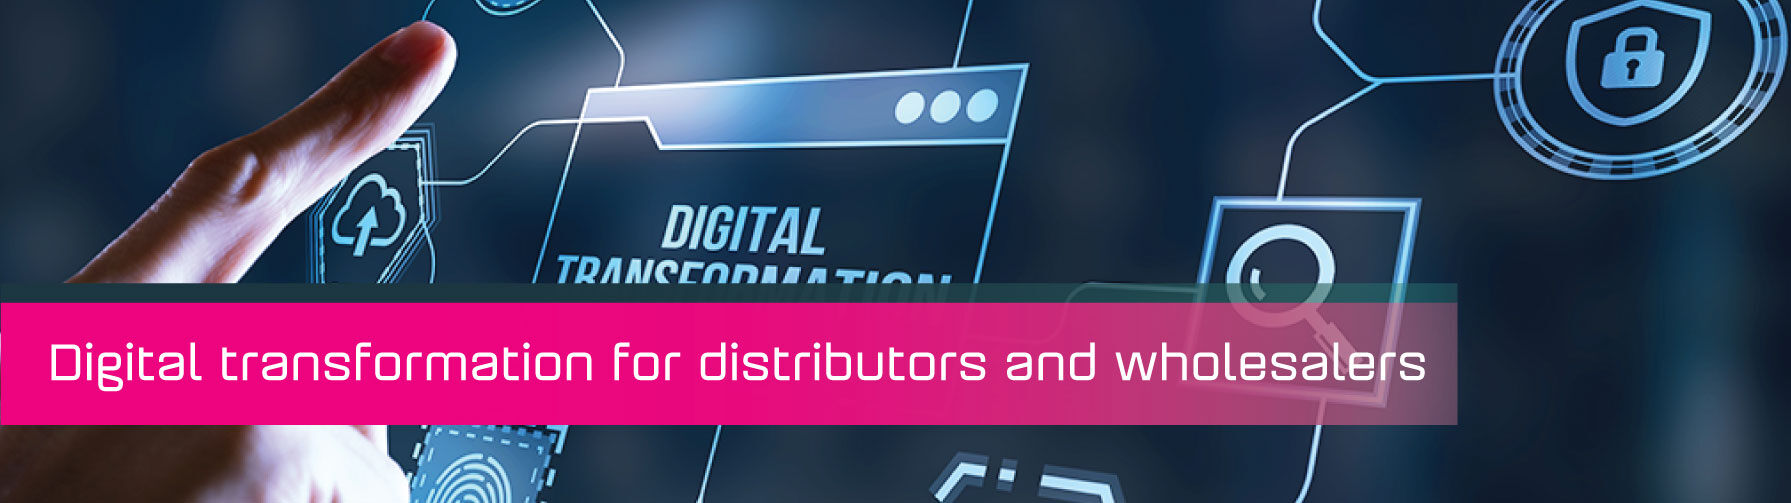 Digital-transformation-for-distributors-and-wholesalers-header